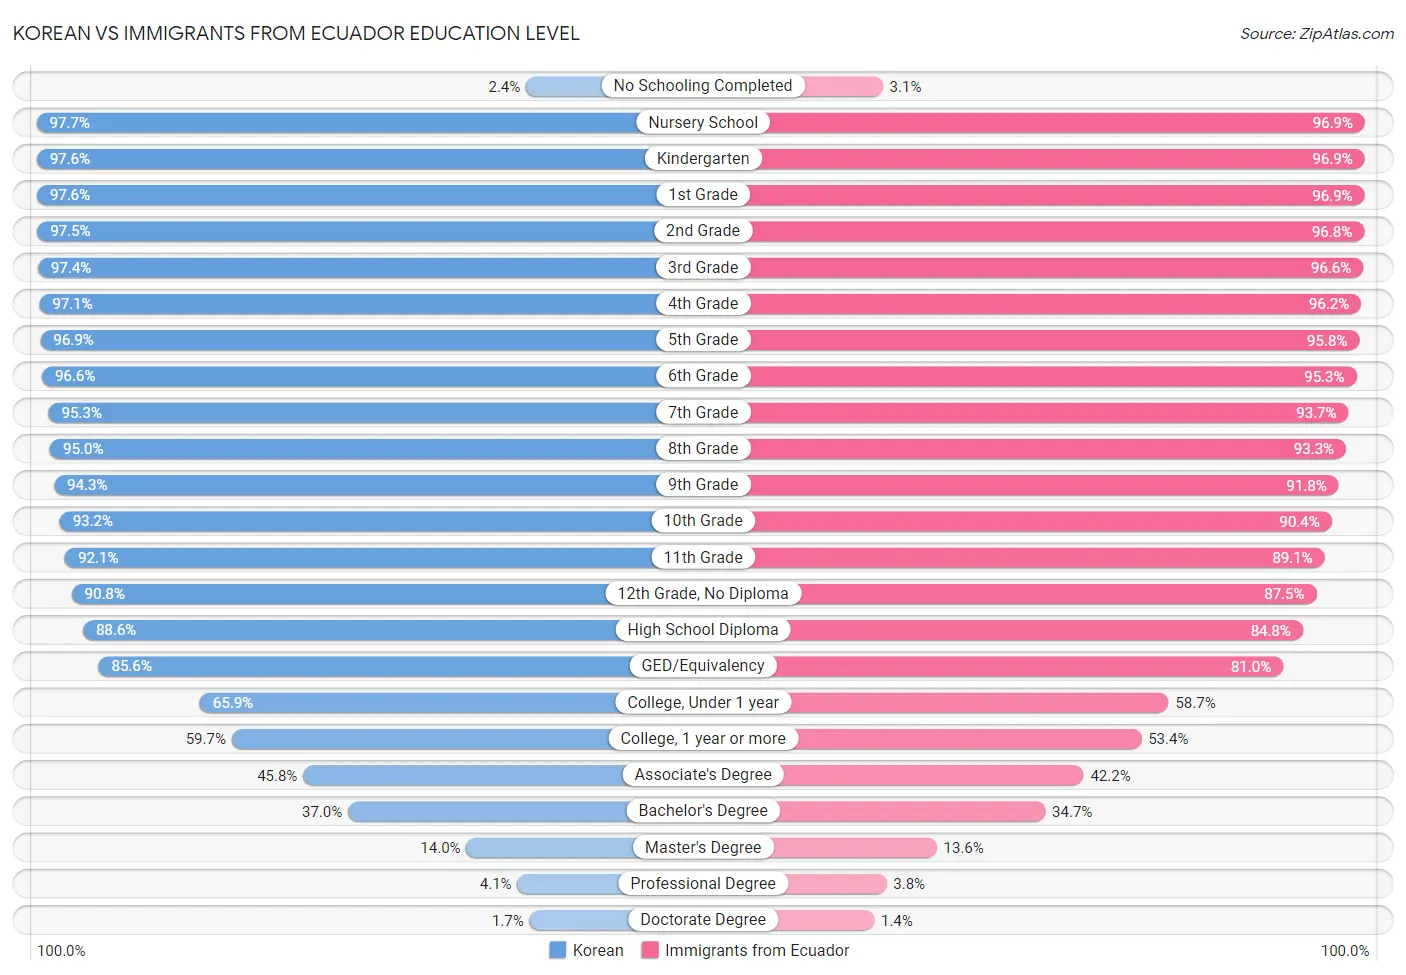 Korean vs Immigrants from Ecuador Education Level